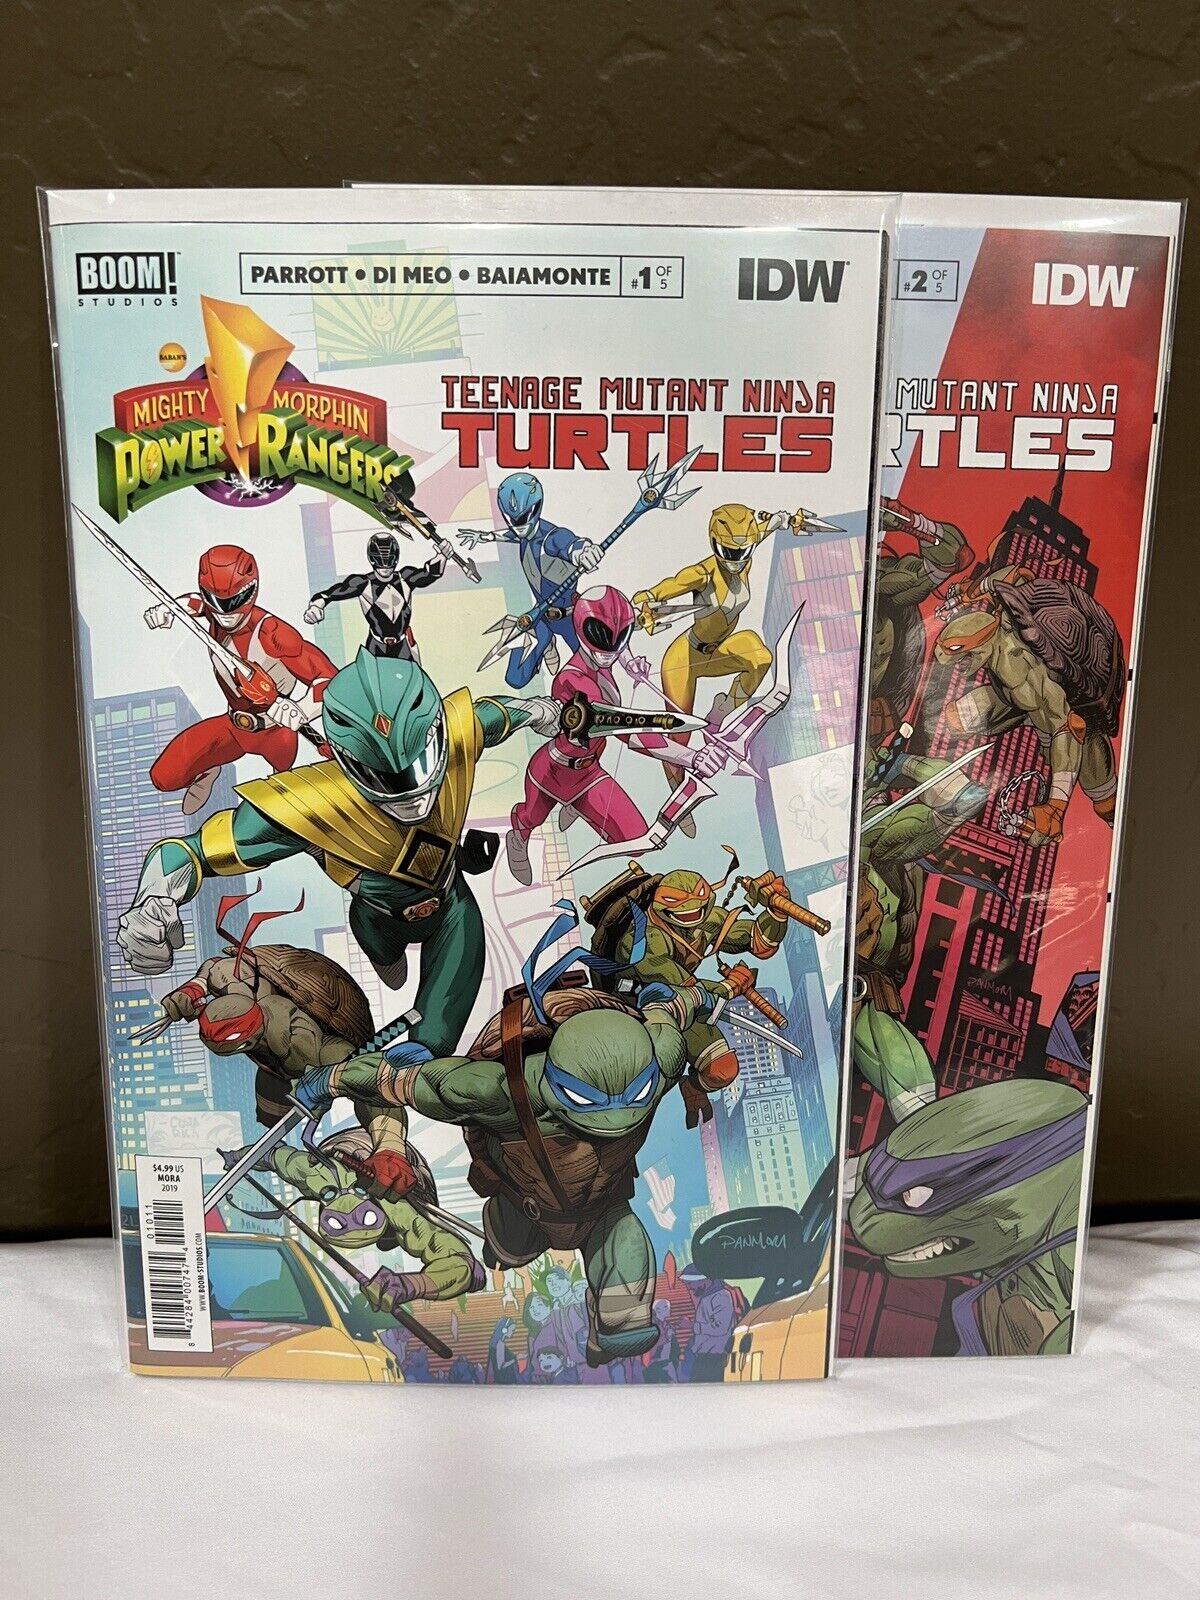 Power Rangers Ninja Turtles IDW Issues 1 & 2